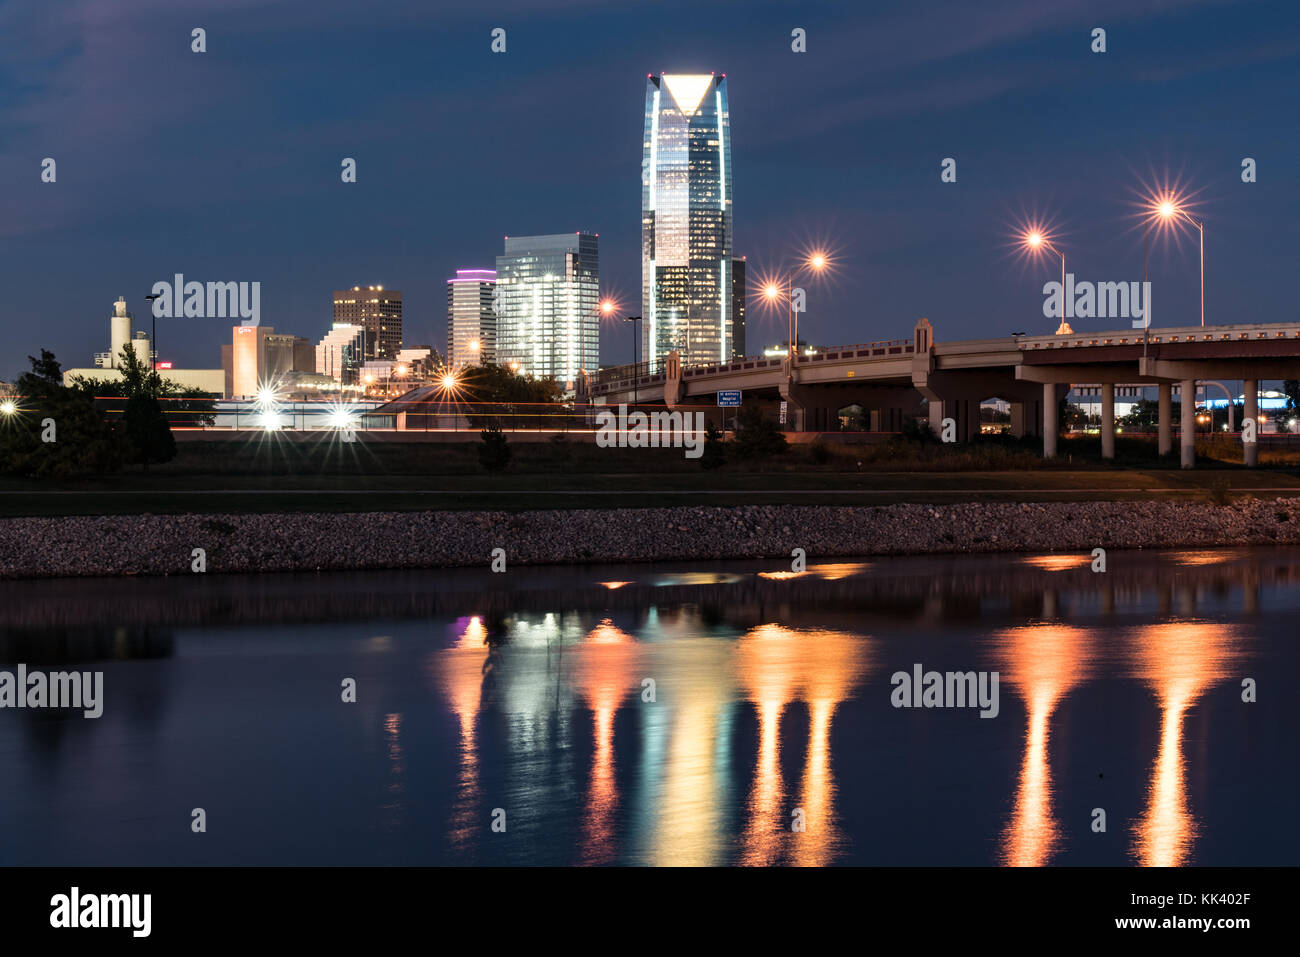 OKLAHOMA CITY, OK - OCTOBER 11, 2017: Skyline of Oklahoma City, OK at night with reflection in river Stock Photo